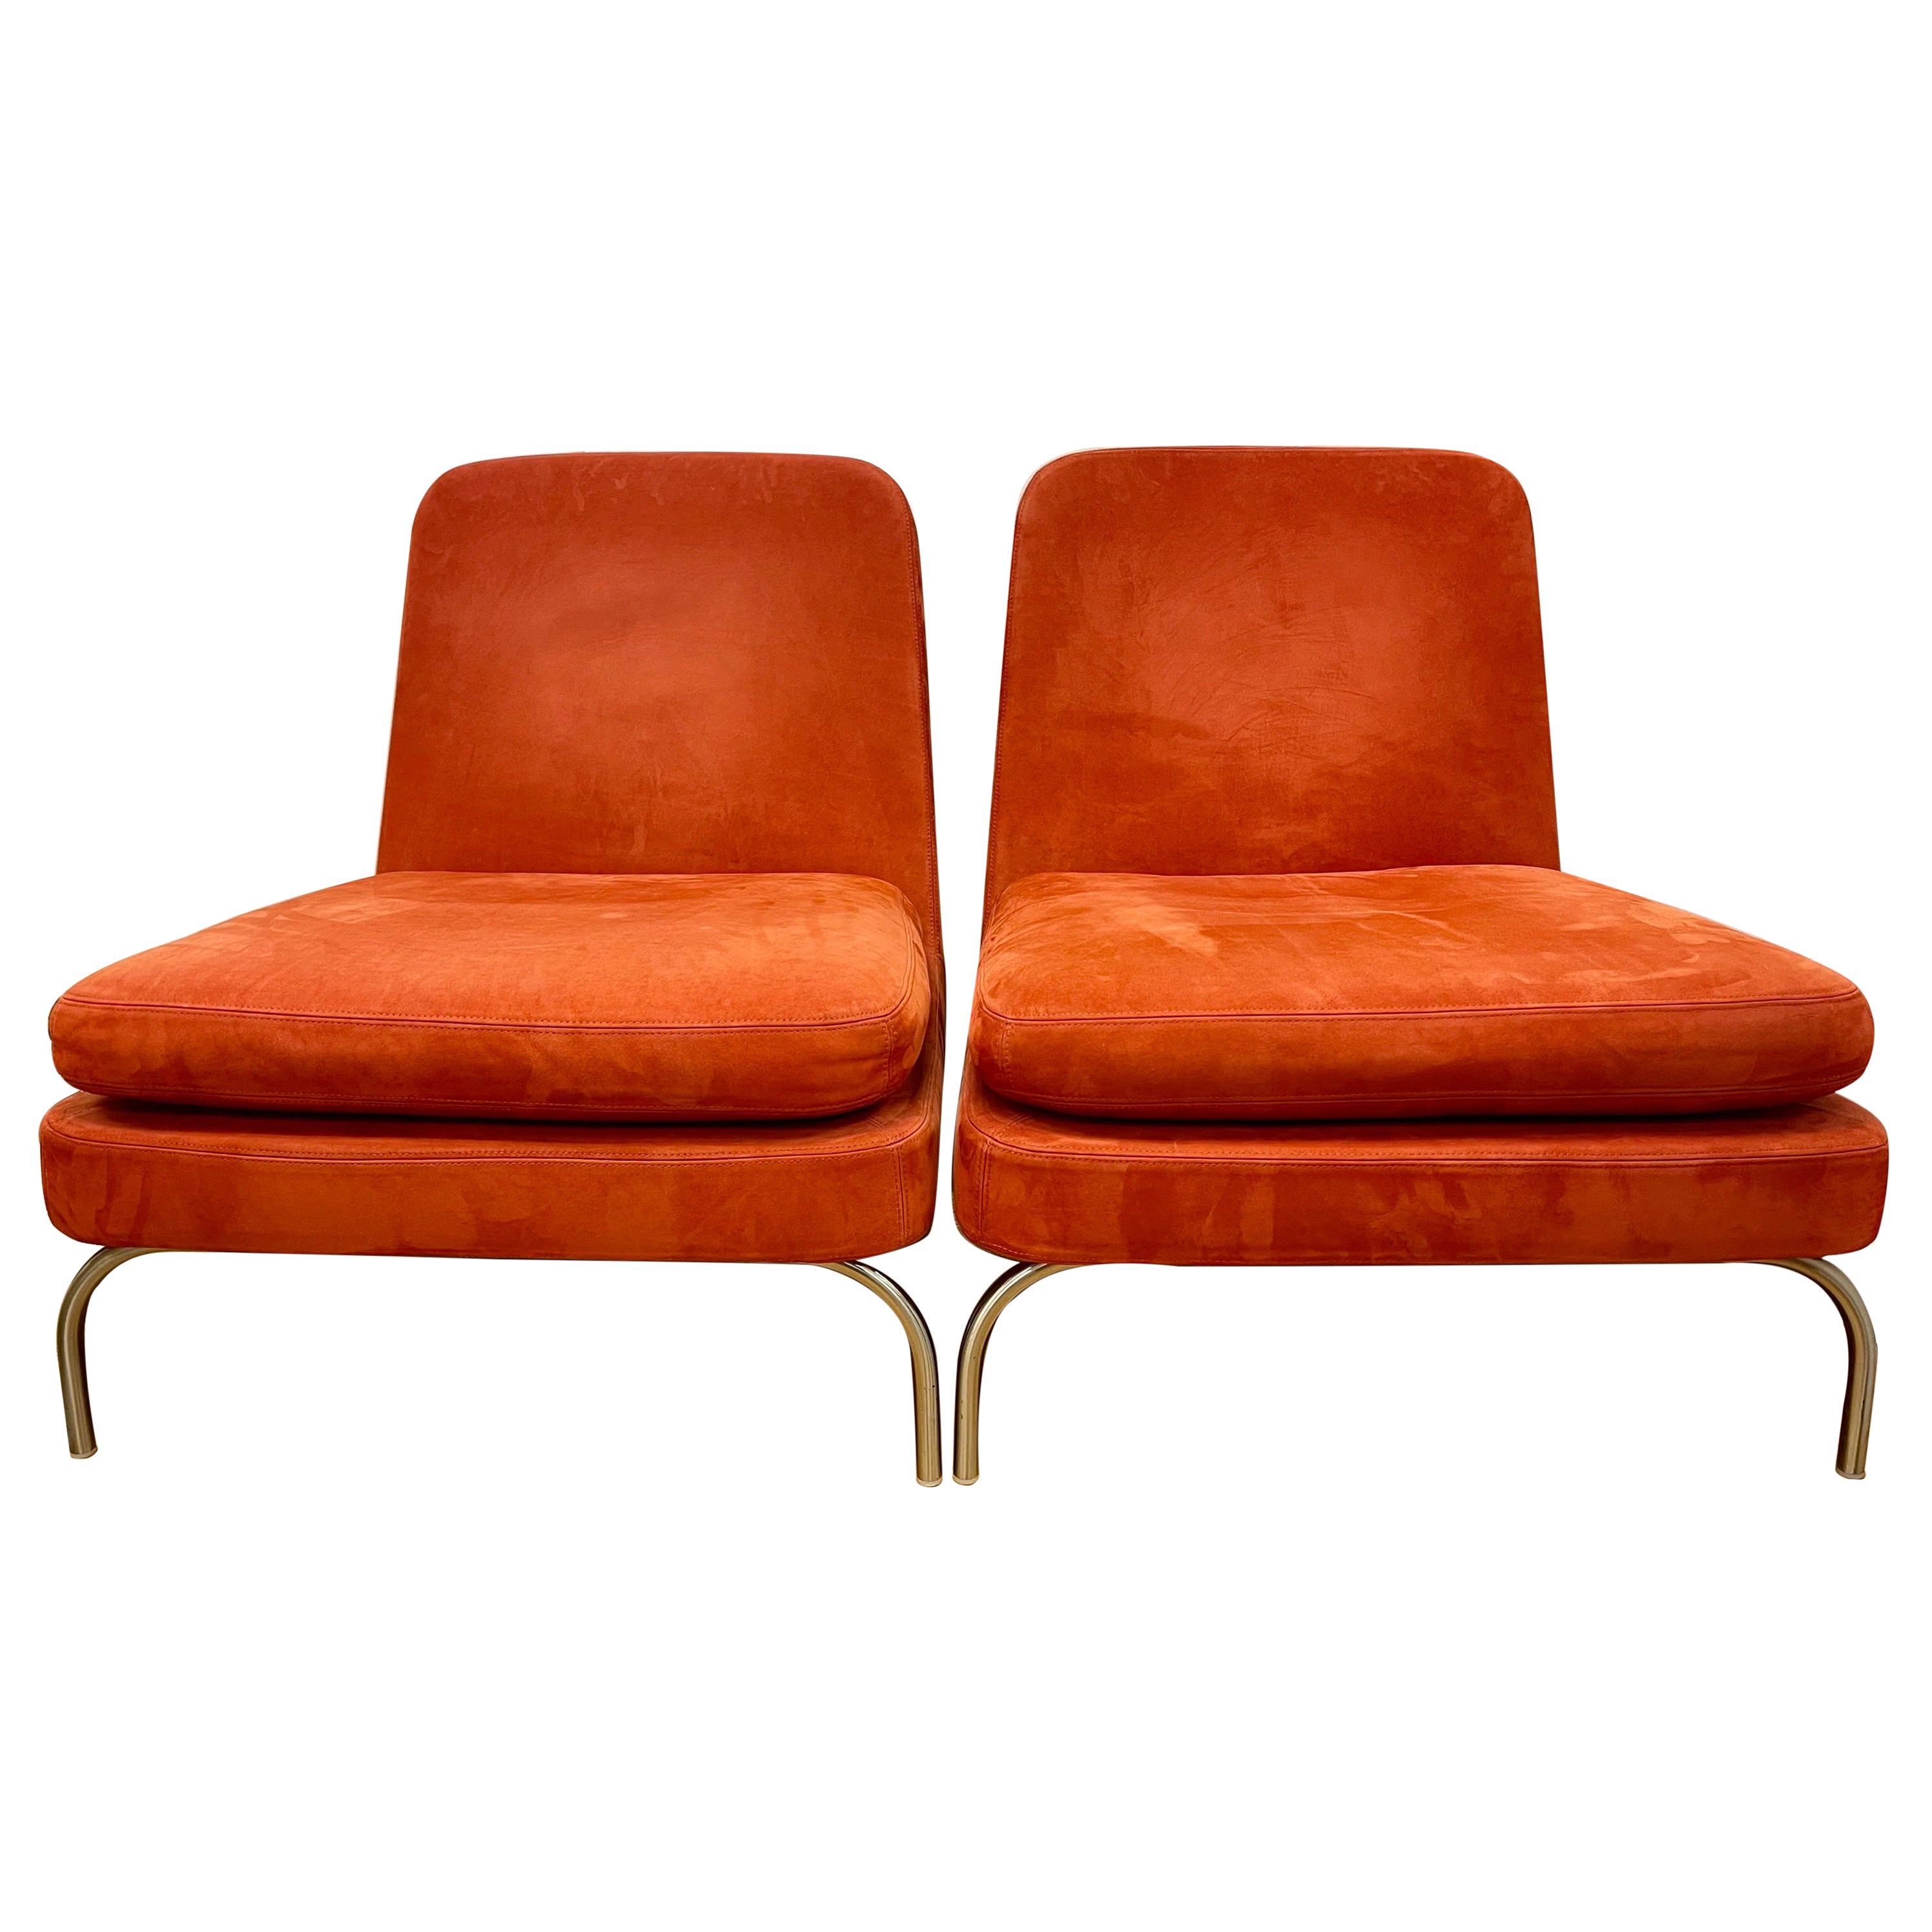 Pair of Signed Minotti Gigi Radice Designed Orange Suede Lounge Chairs Italy